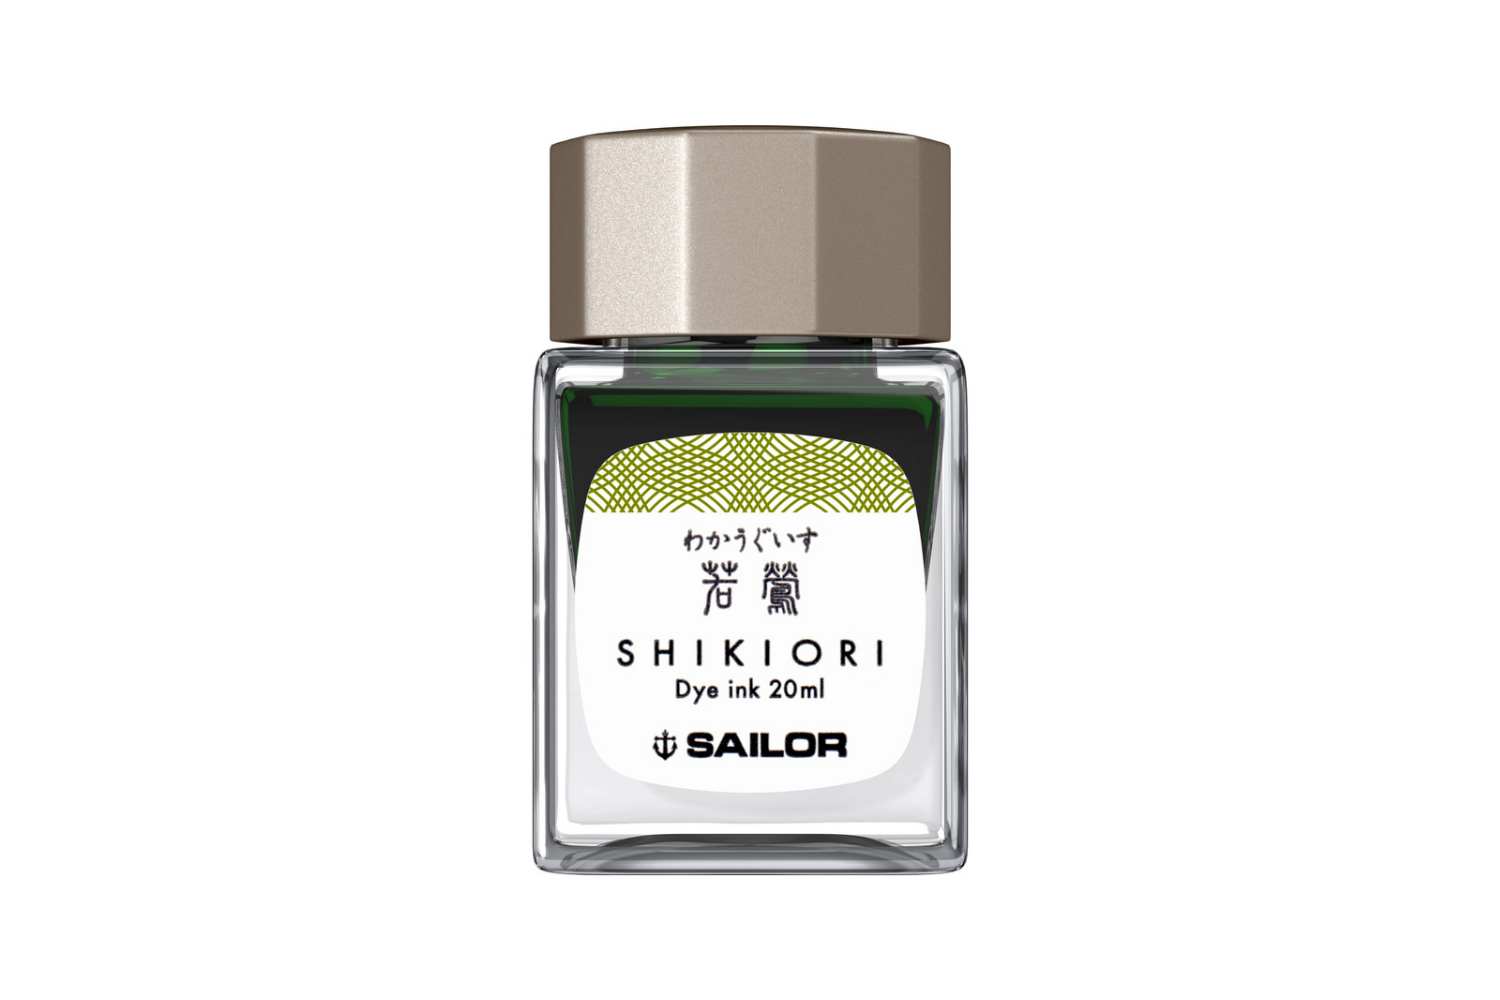 Sailor - Shikiori Spring Waka Uguisu Green 20ml